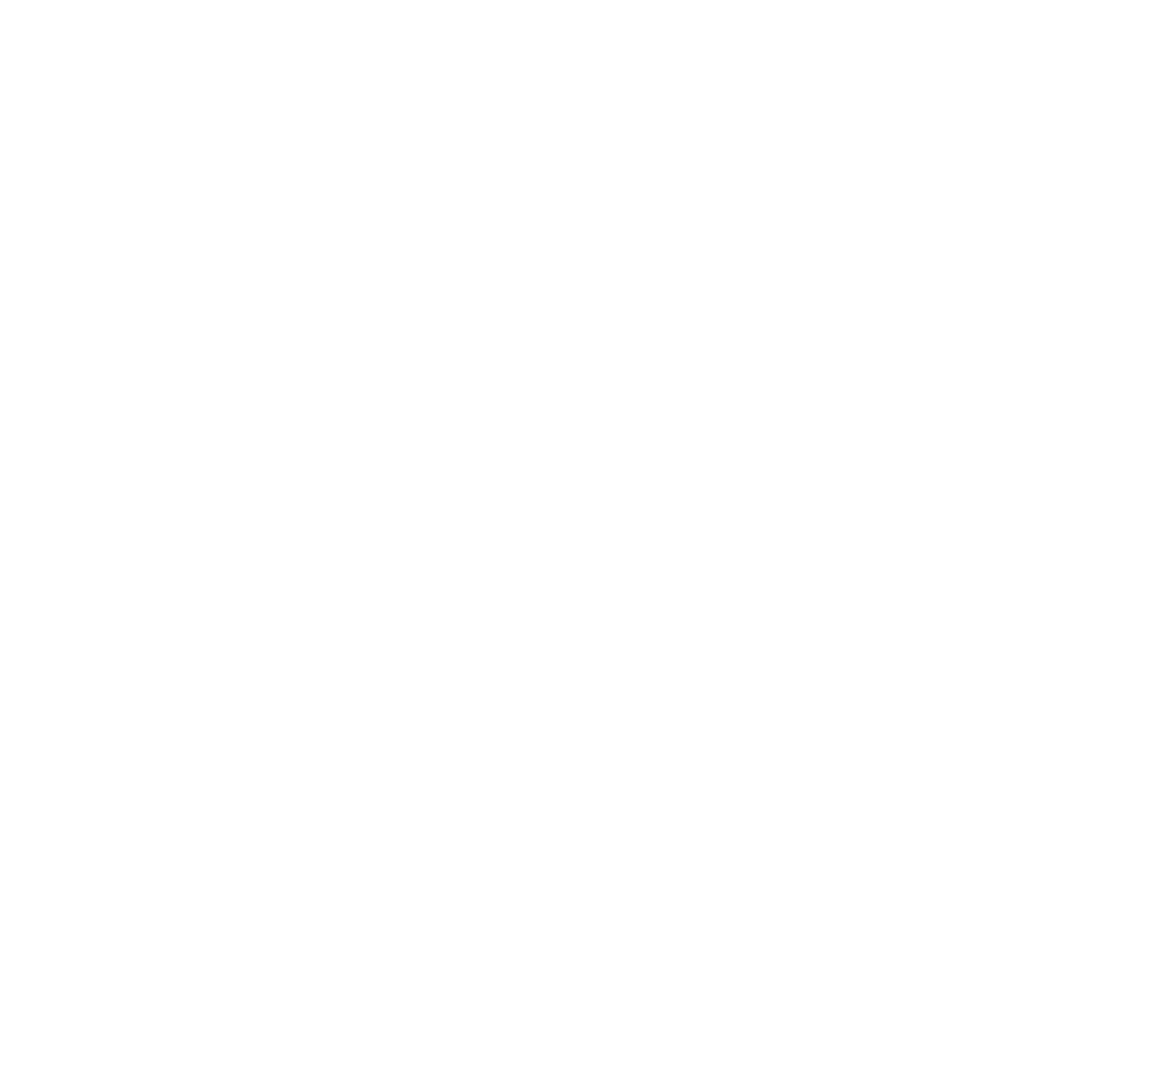 Owens logo background